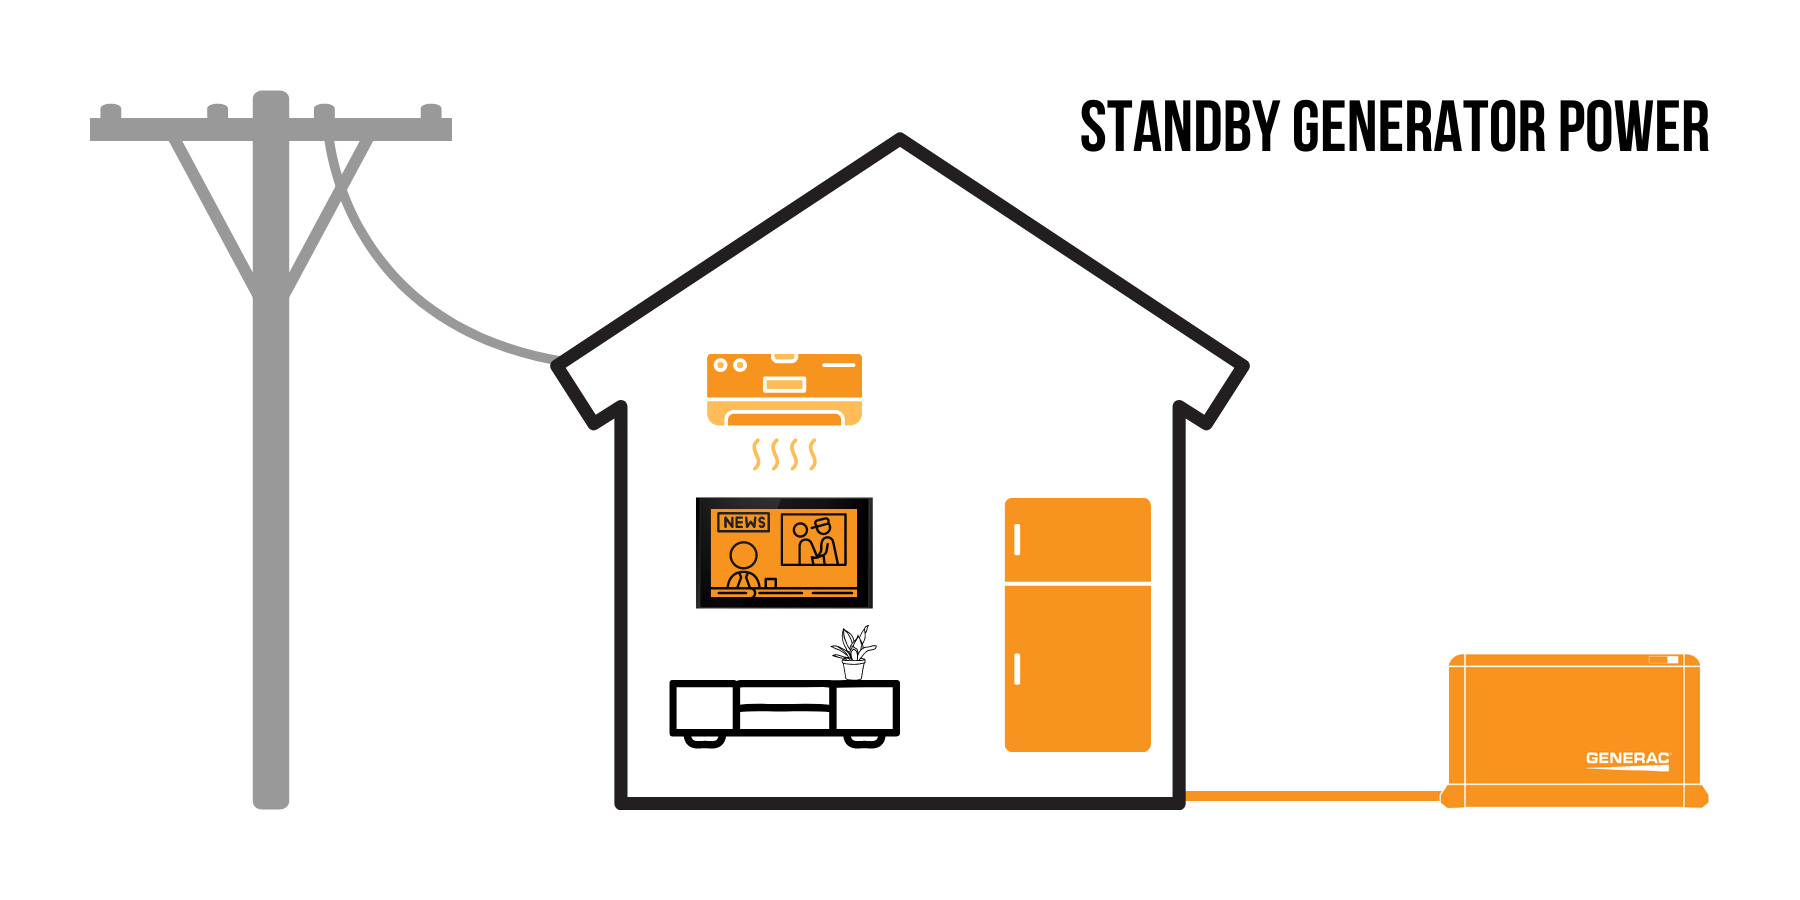 Standby Generator Power Diagram